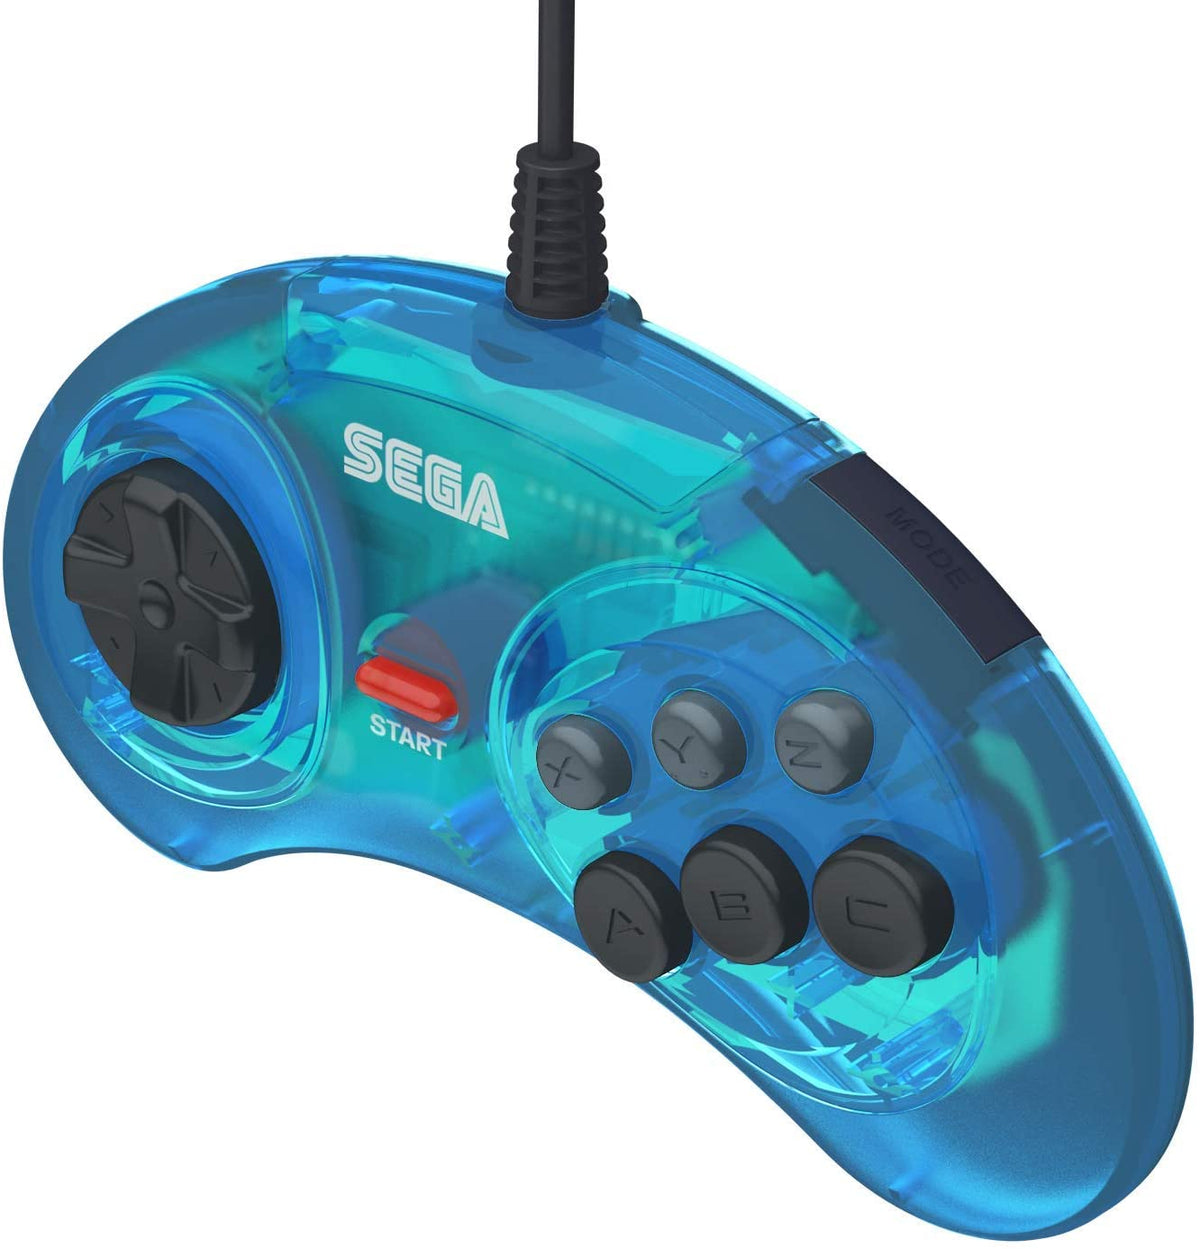 Retro-Bit Sega Mega Drive 6-button USB controller clear blue Gamesellers.nl